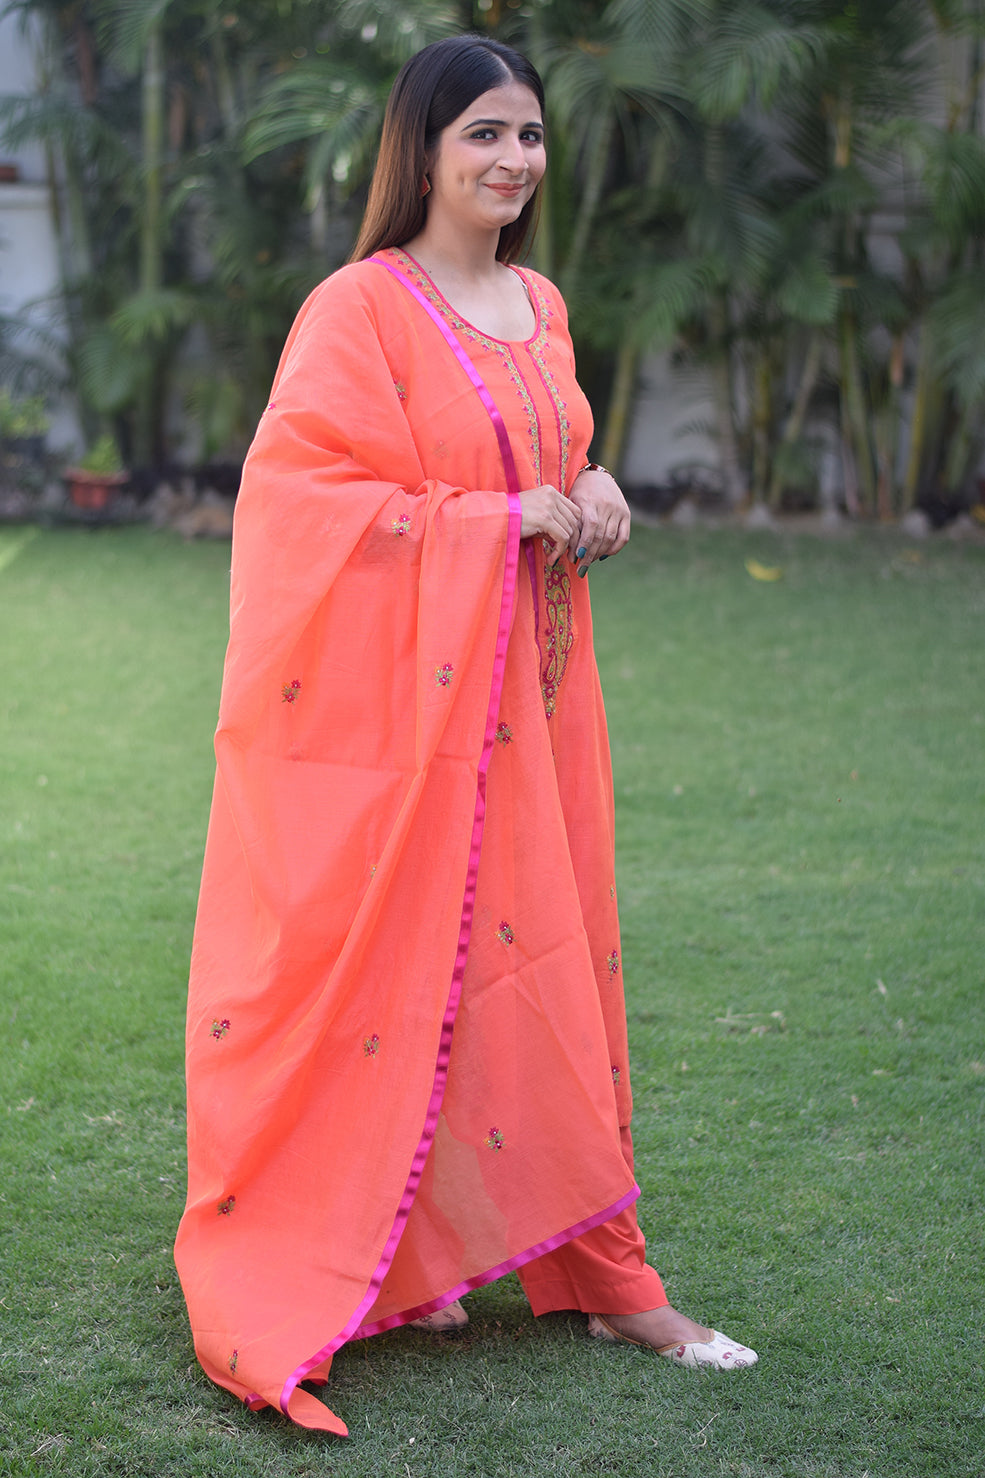 Indian women wearing full embroidered kurta